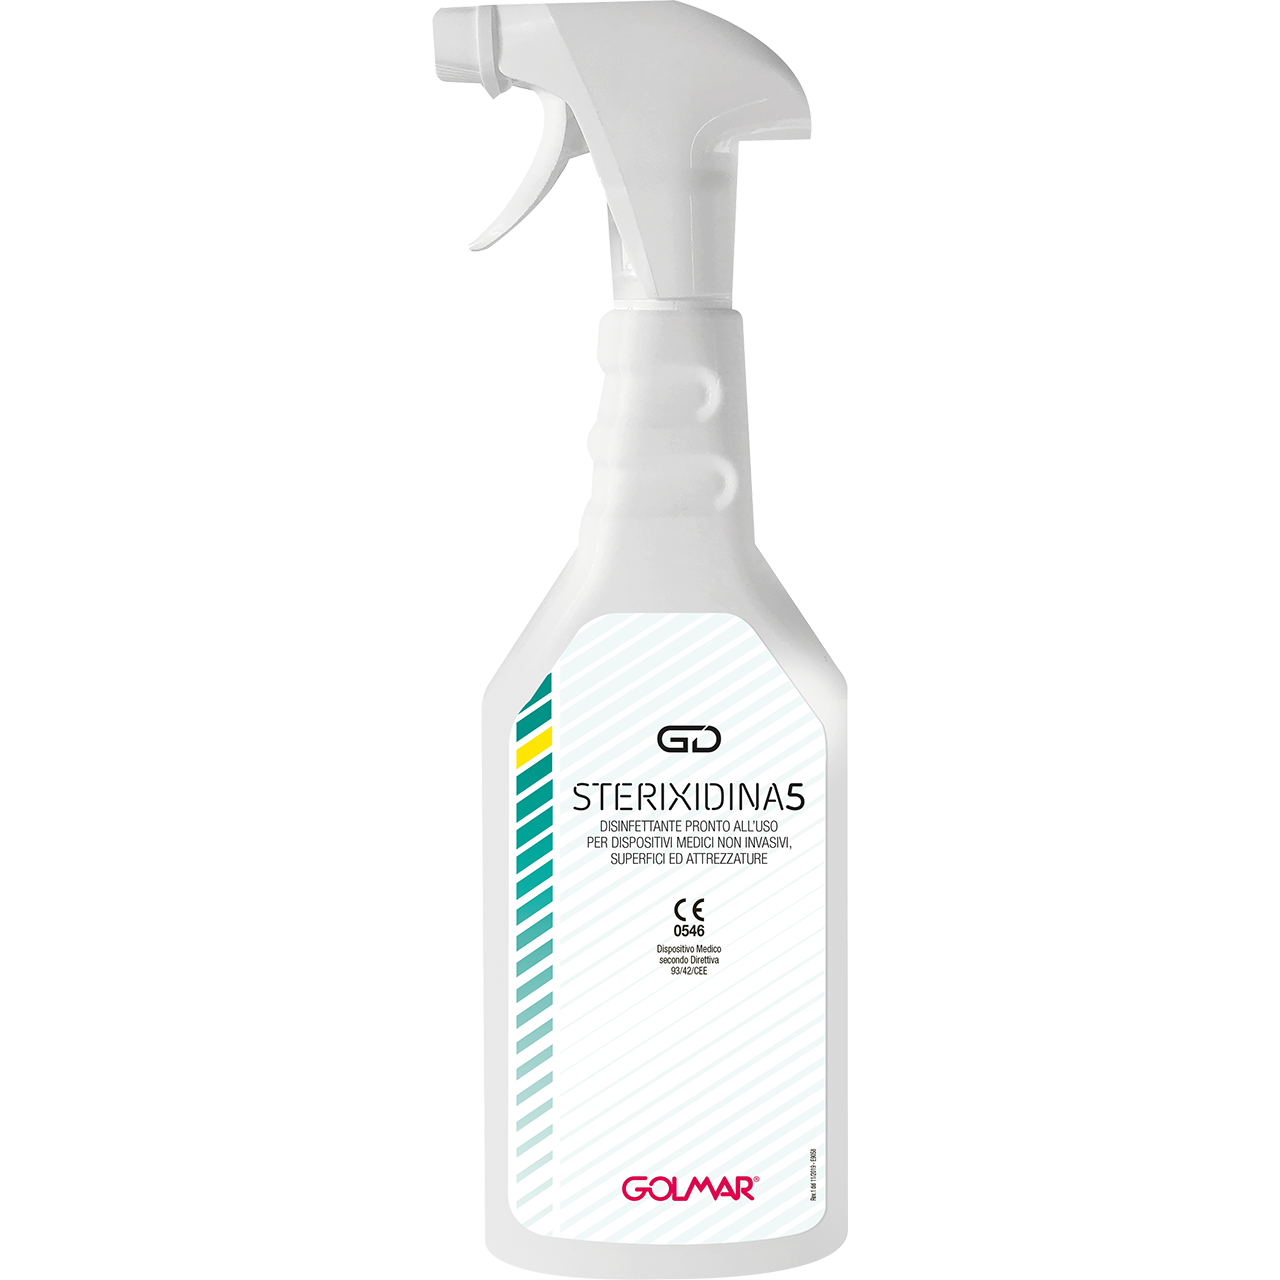 Disinfettante Detergente GD Sterixidina5